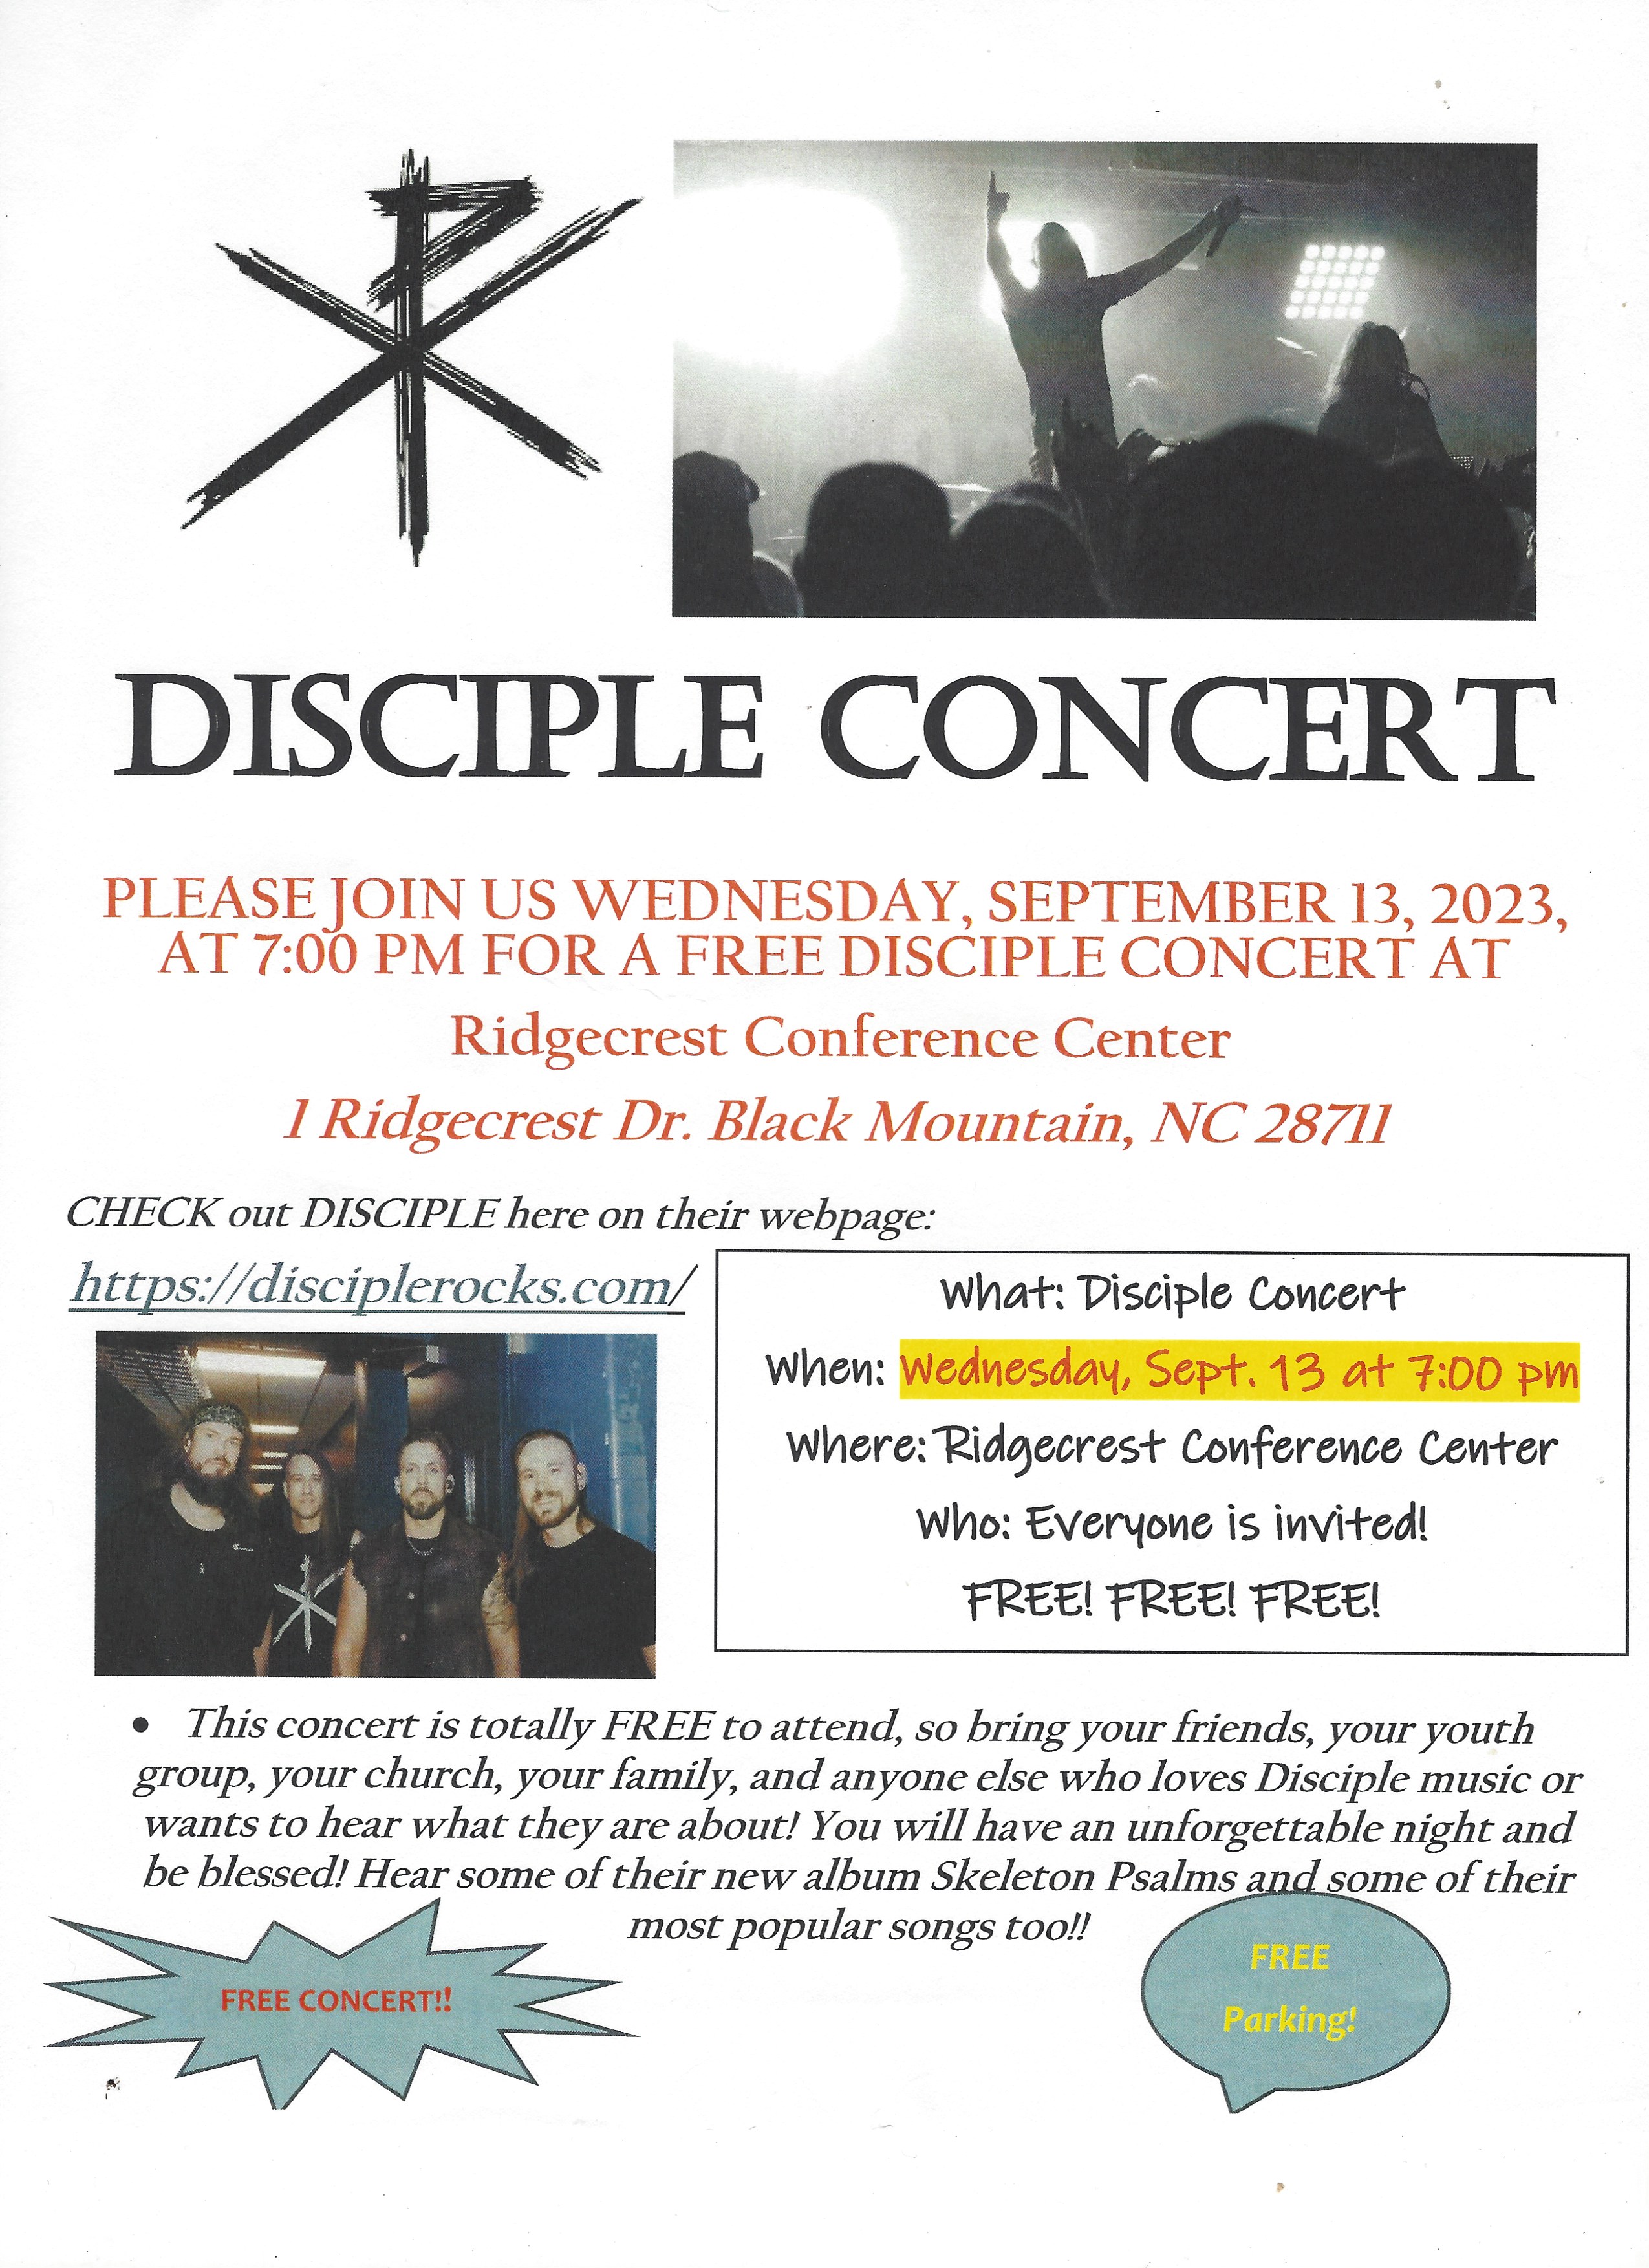 flyer for Disciple concert at Ridgecrest, September 13, 7pm. Free admission.